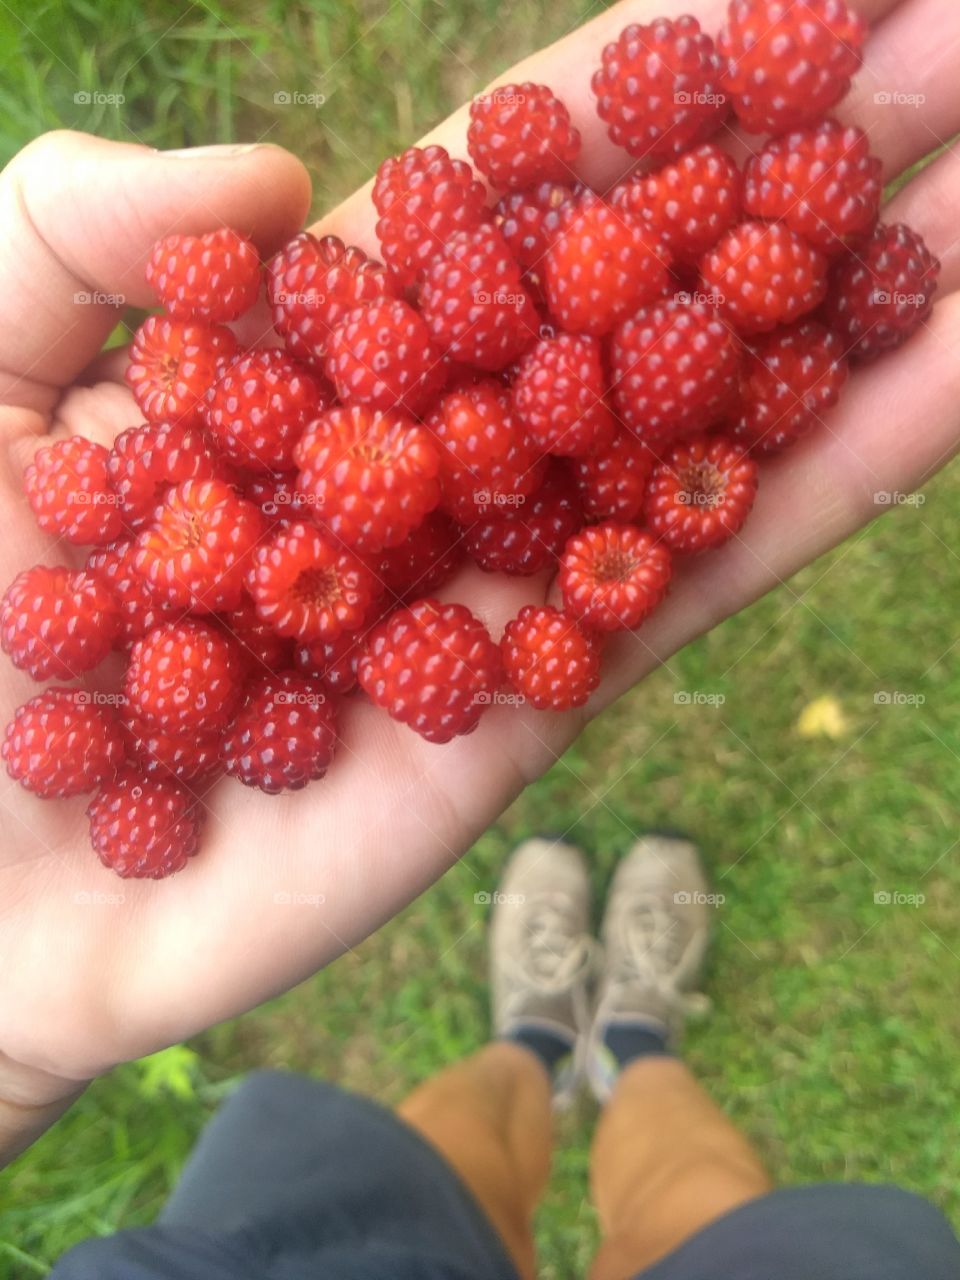 lding wild raspberries